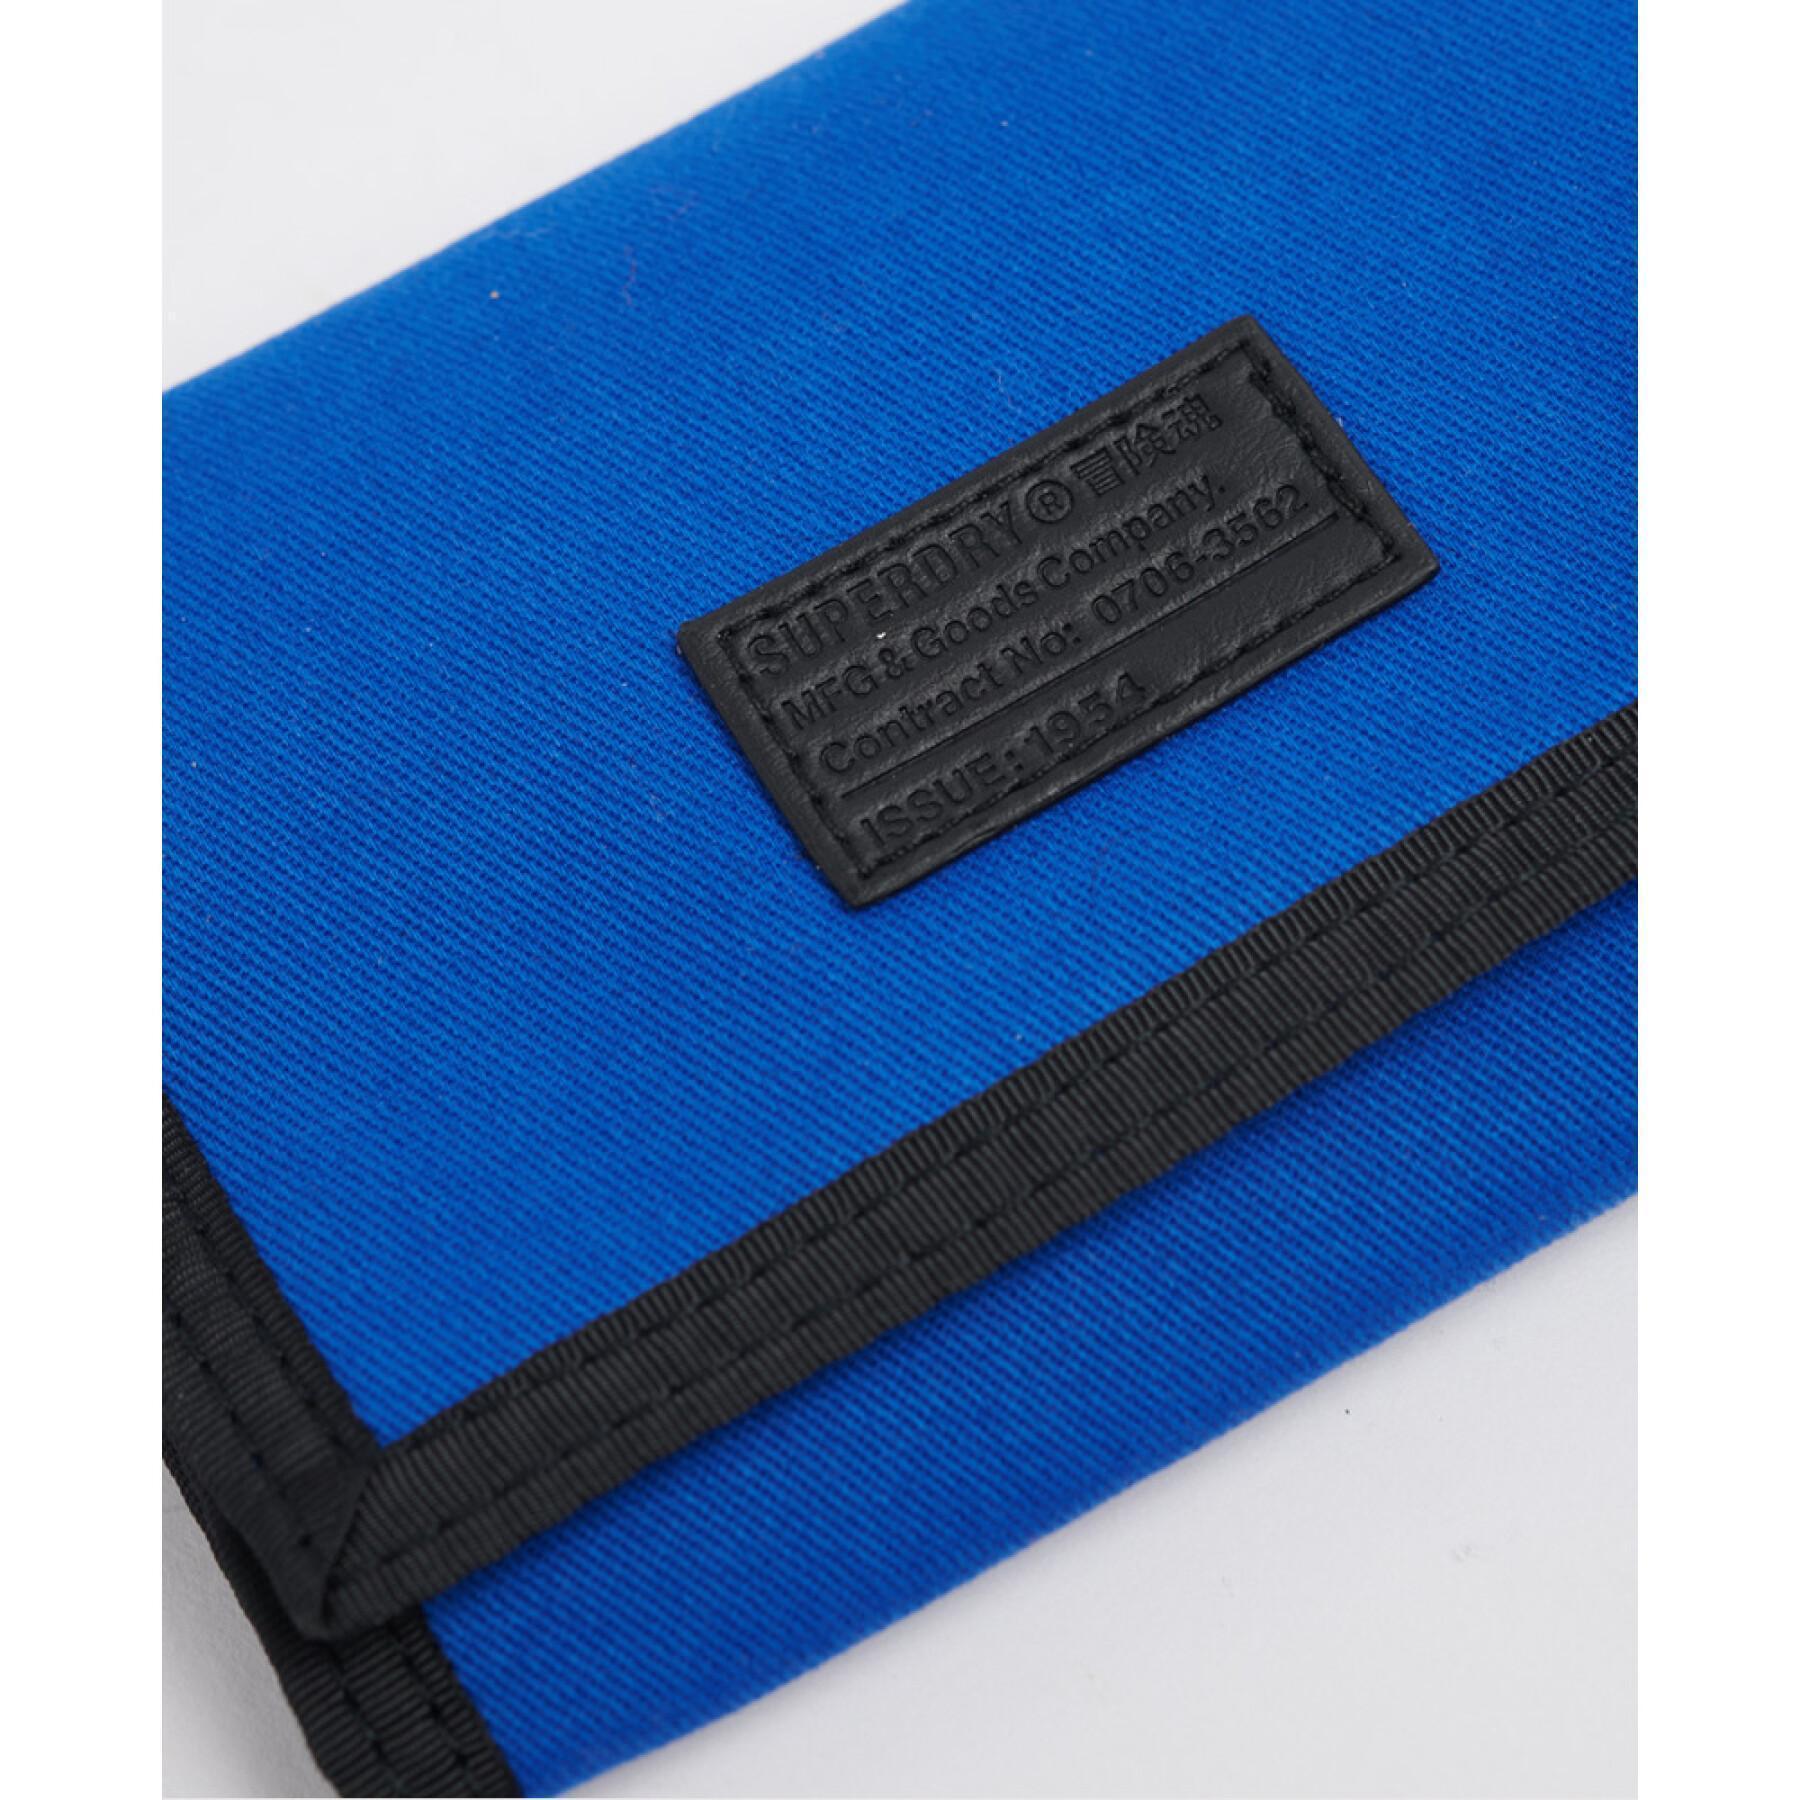 Velcro wallet Superdry Workwear